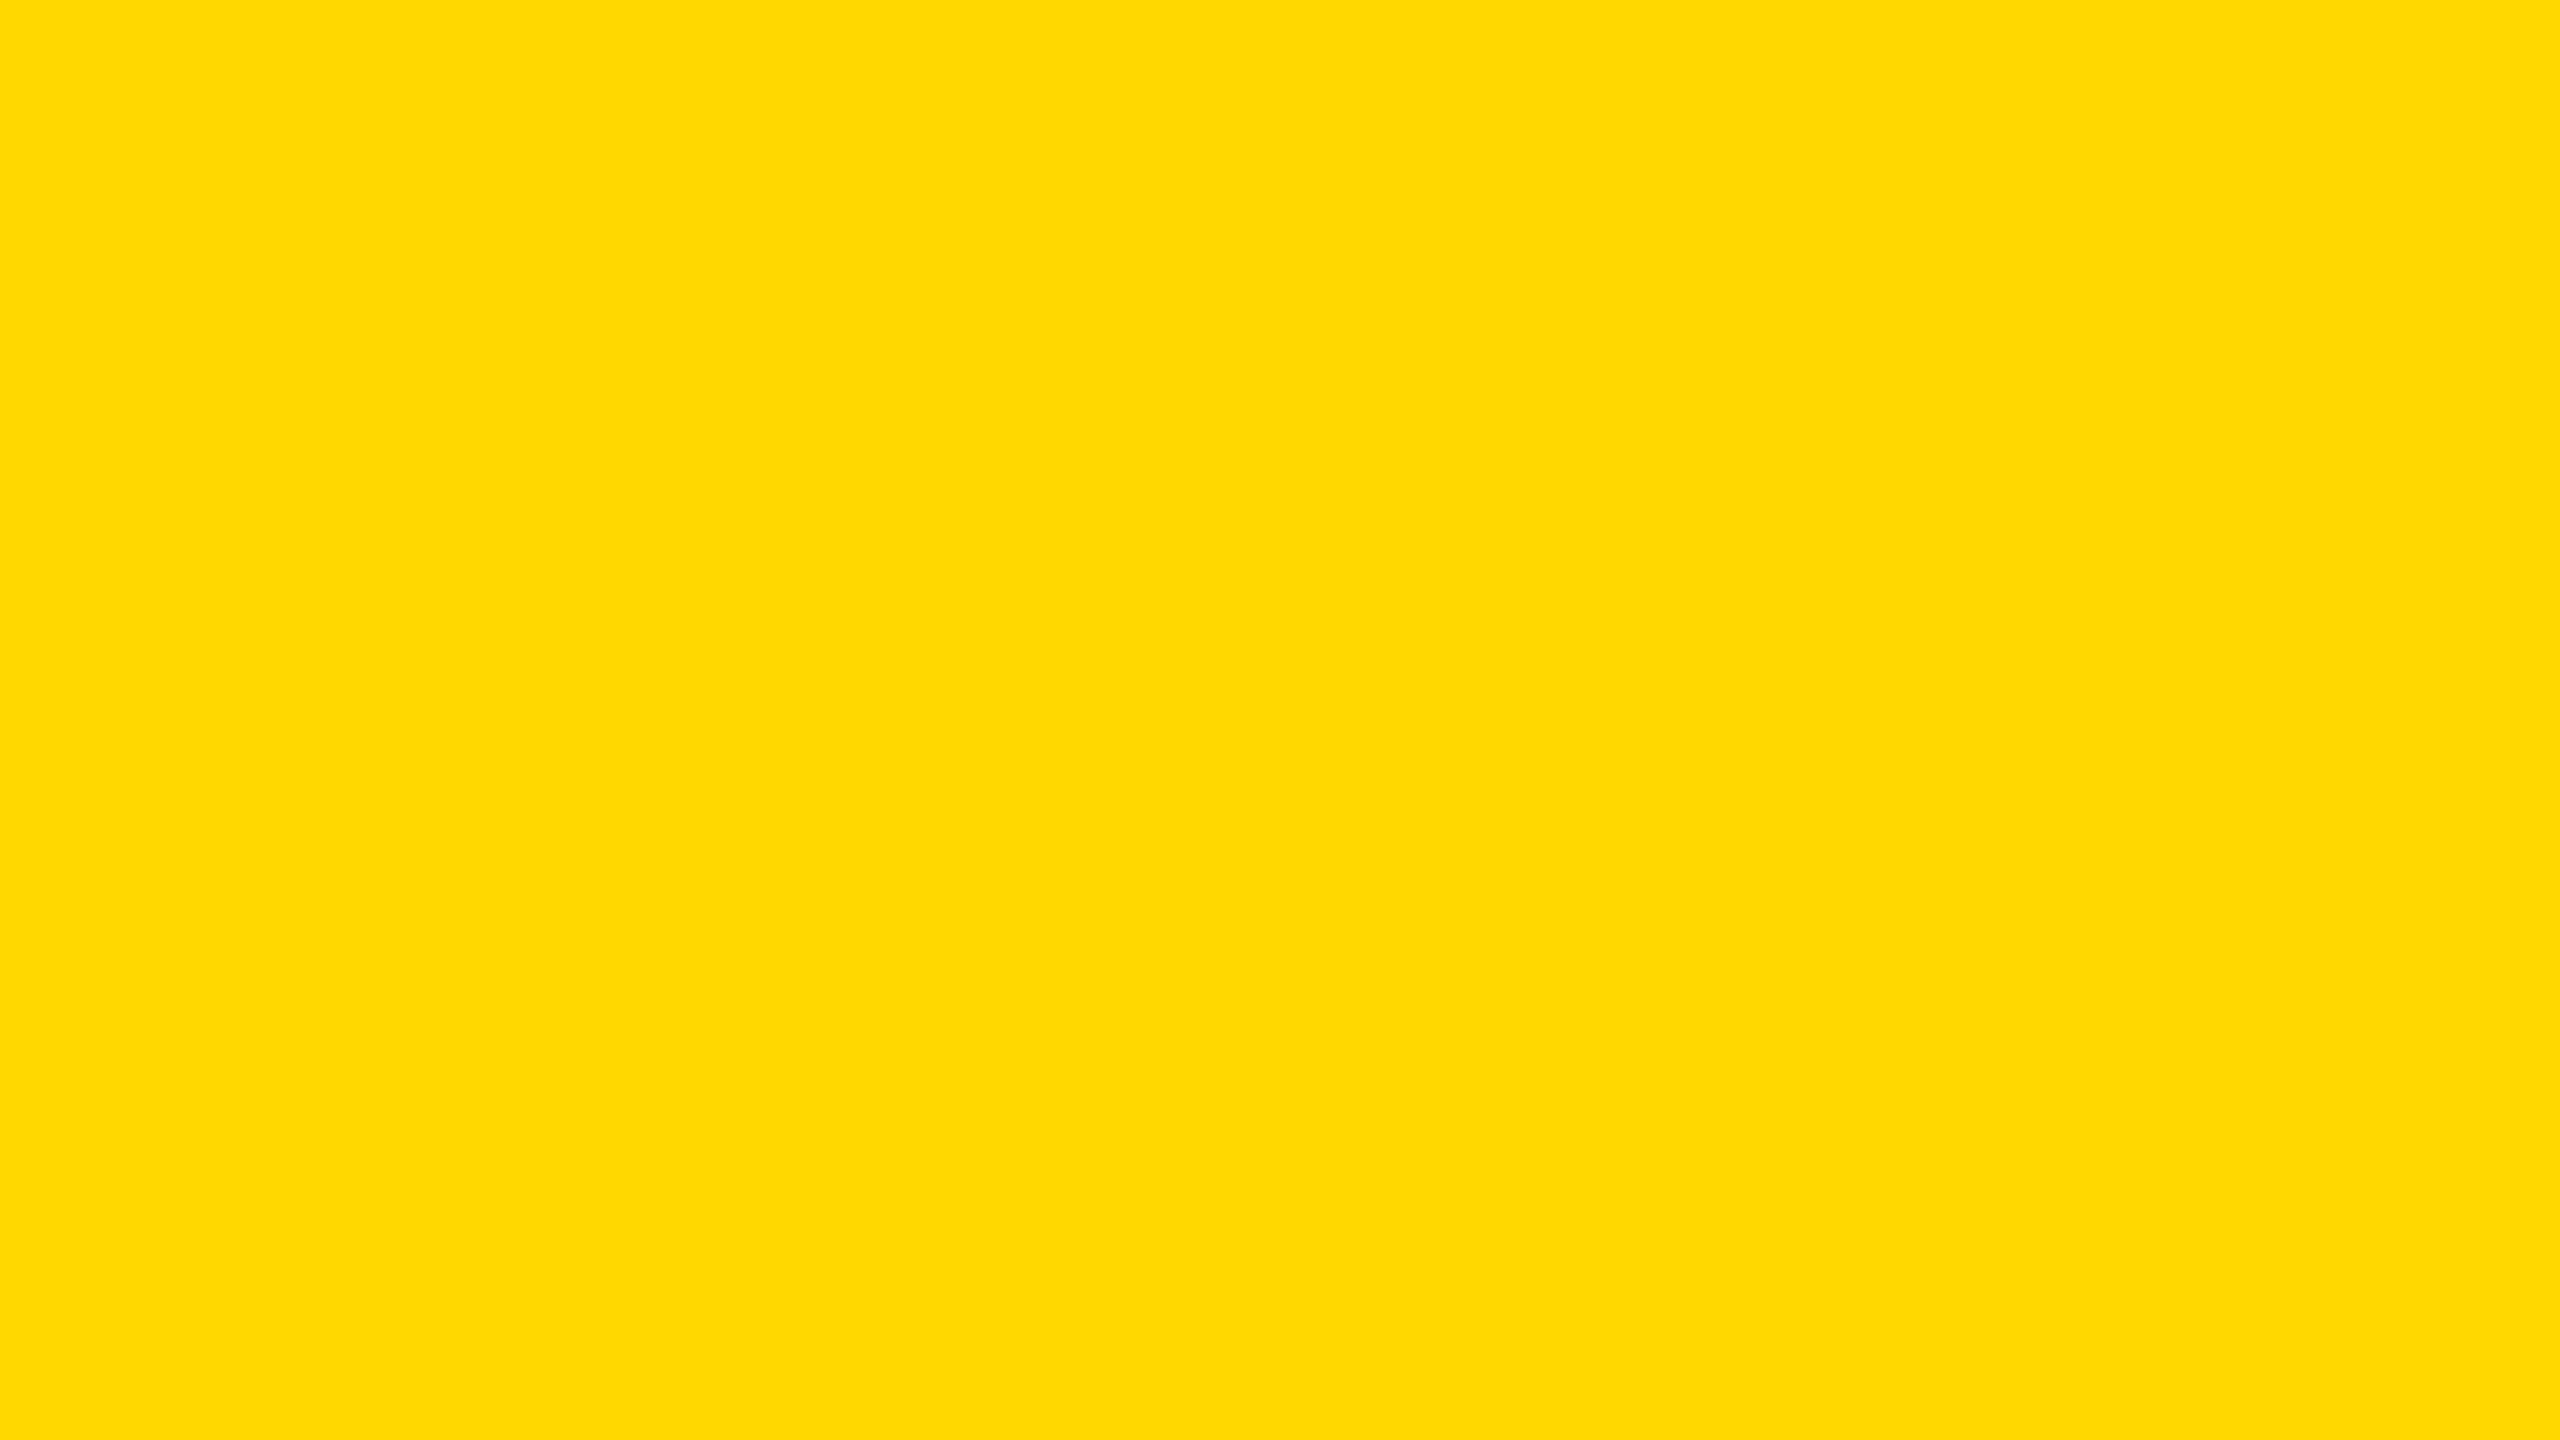 Yellow Background 43936 2560x1440 px